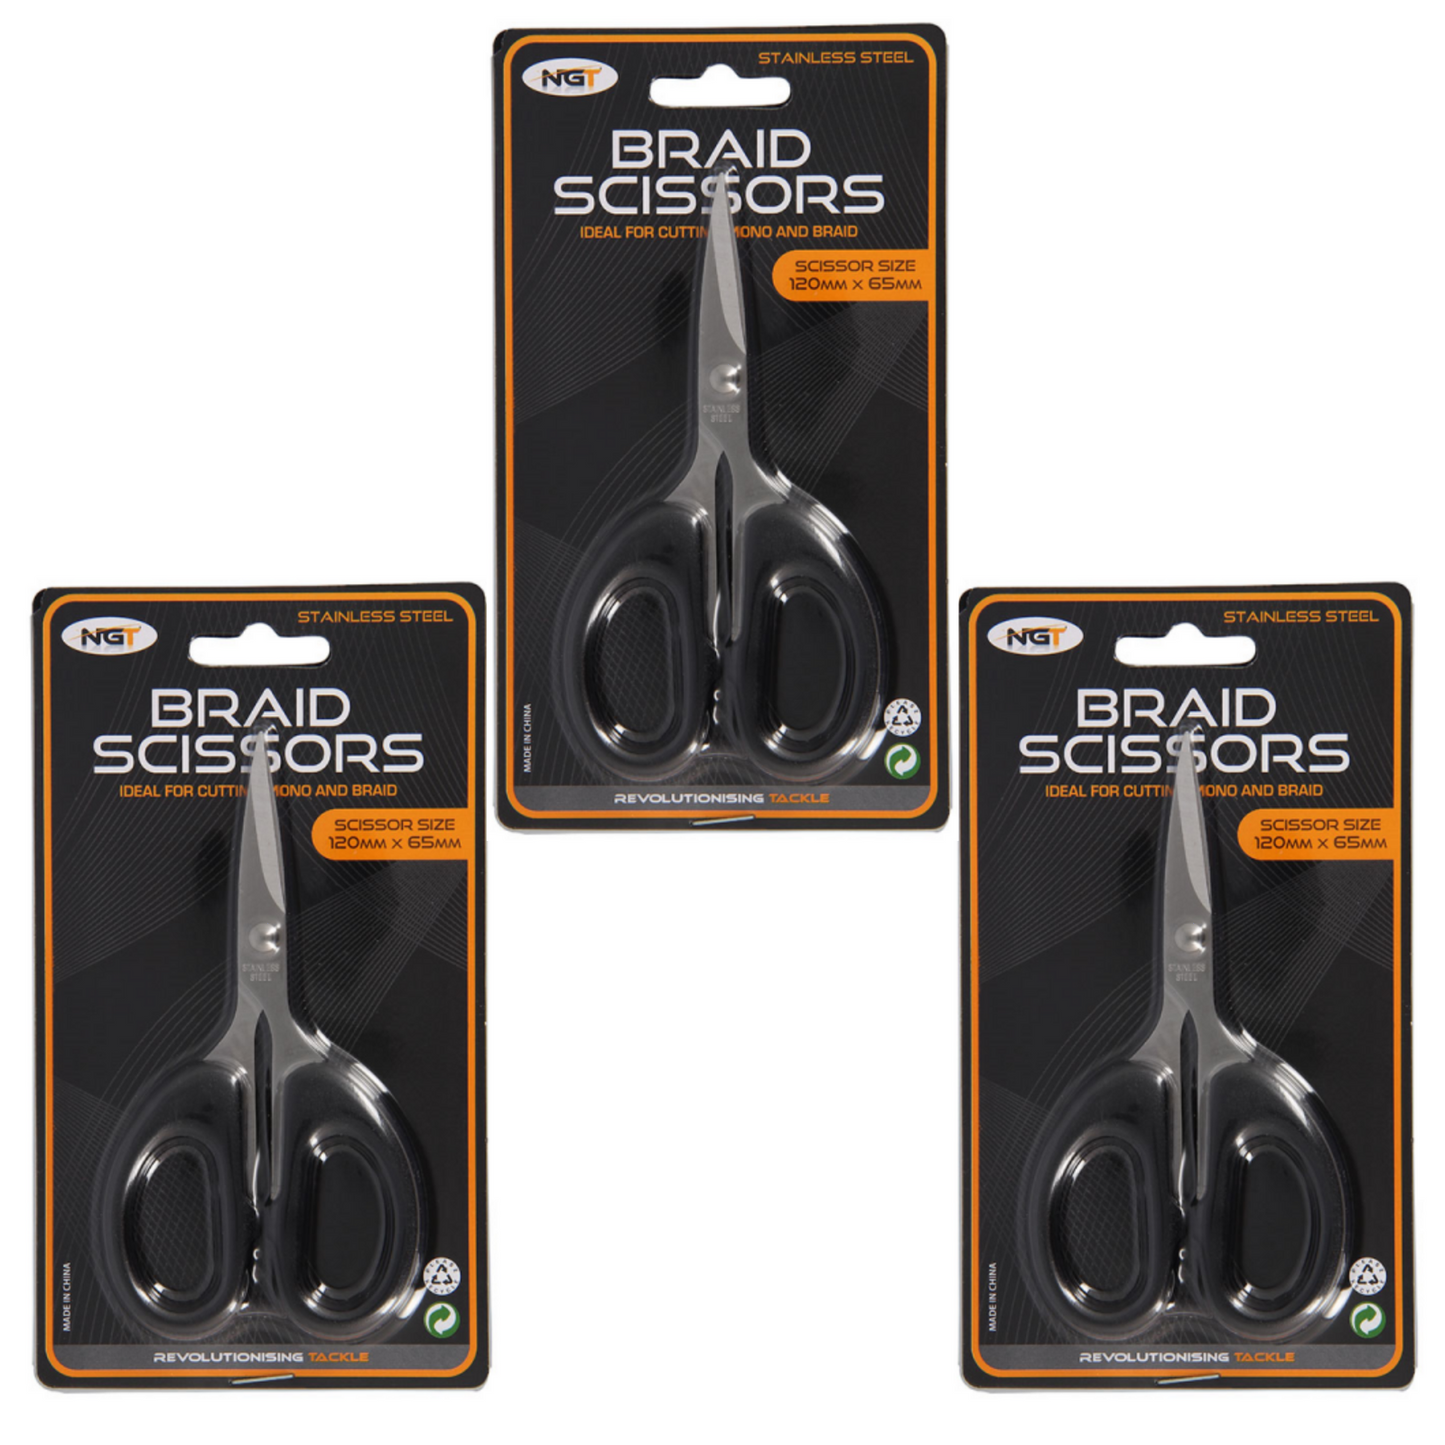 NGT Black Ultra Sharp Stainless Steel Braid Scissors.